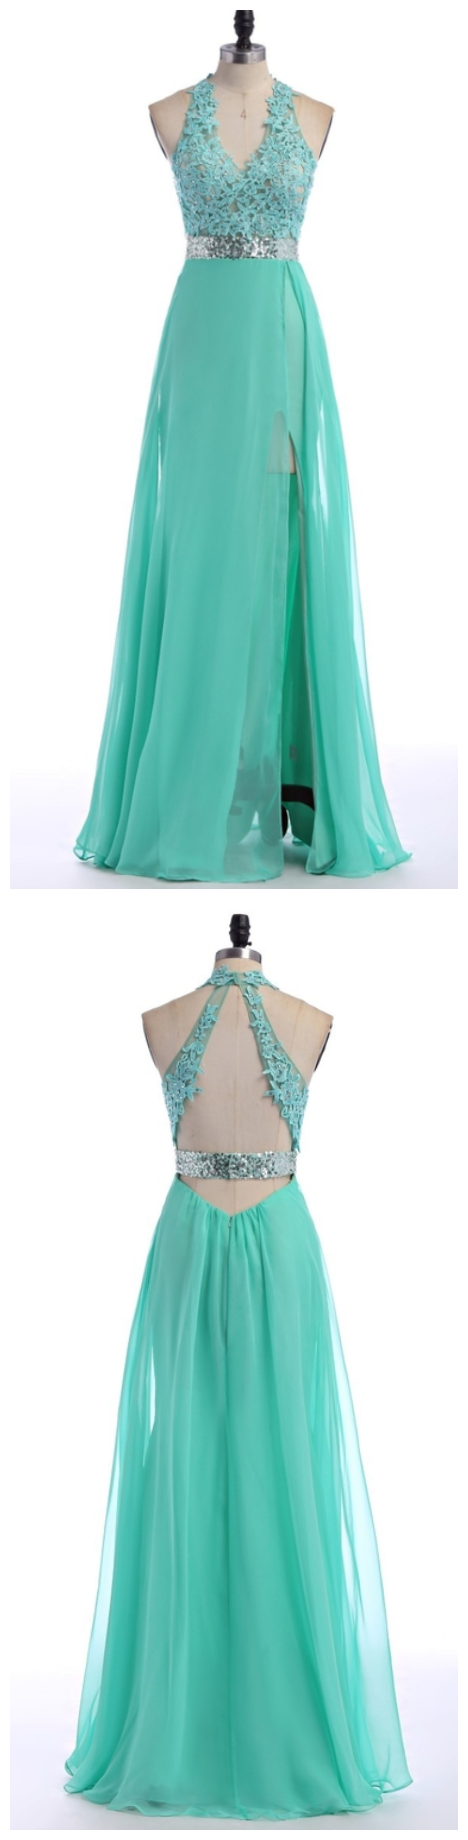 V-neck Green Lace Chiffon Prom Dress,evening Dresses